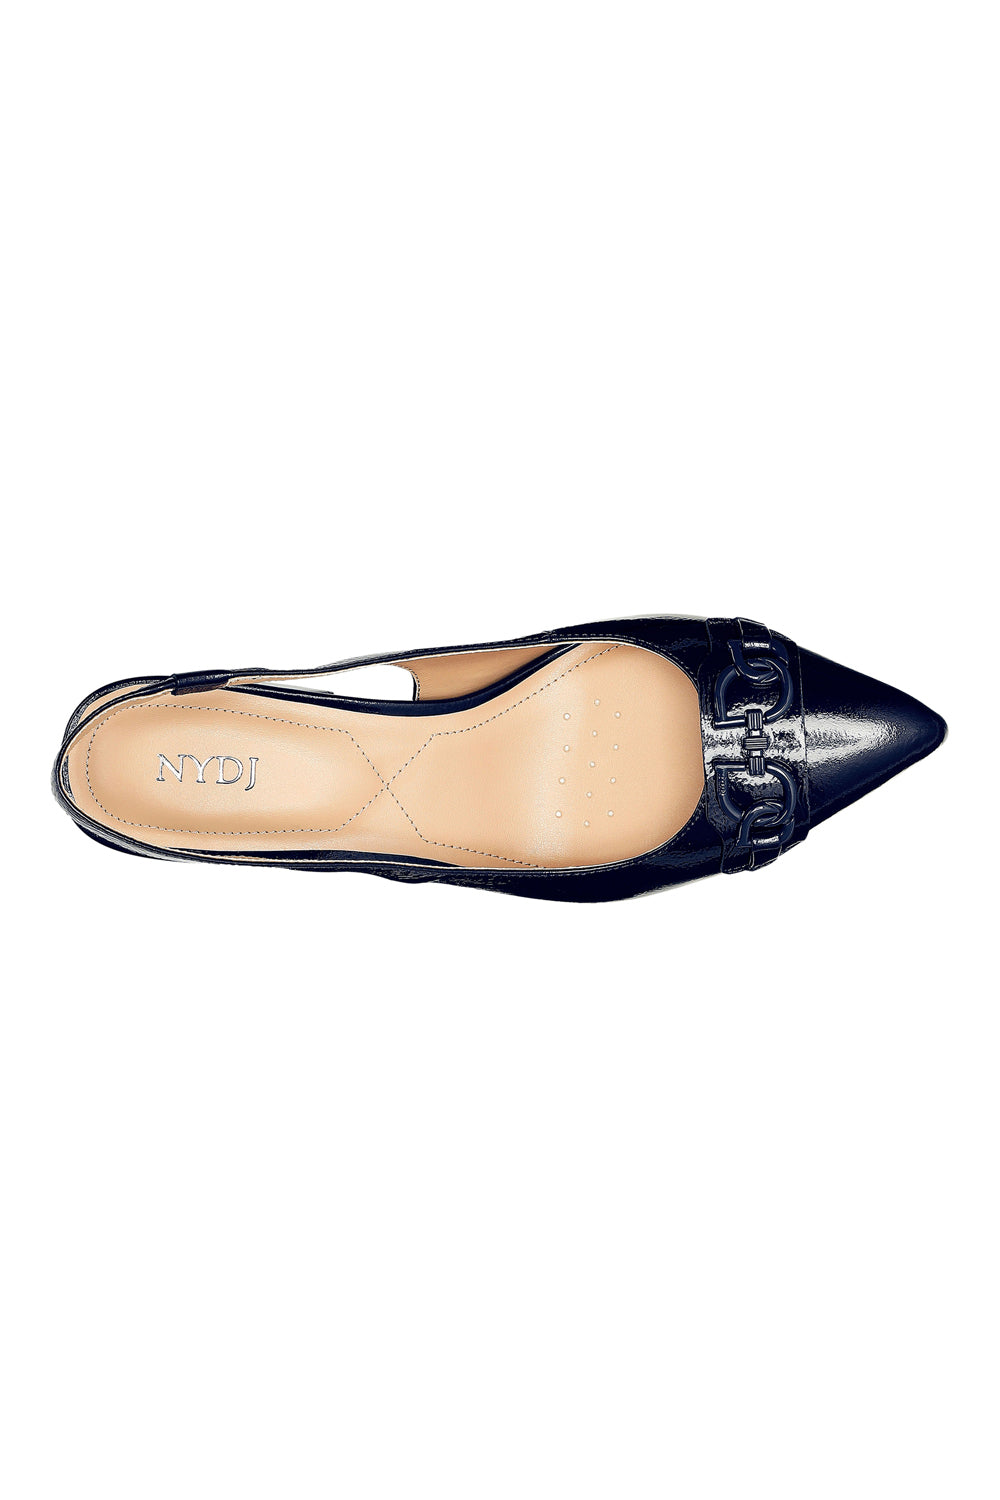 NYDJ Sanya Slingback Heels In Patent Leather - Navy